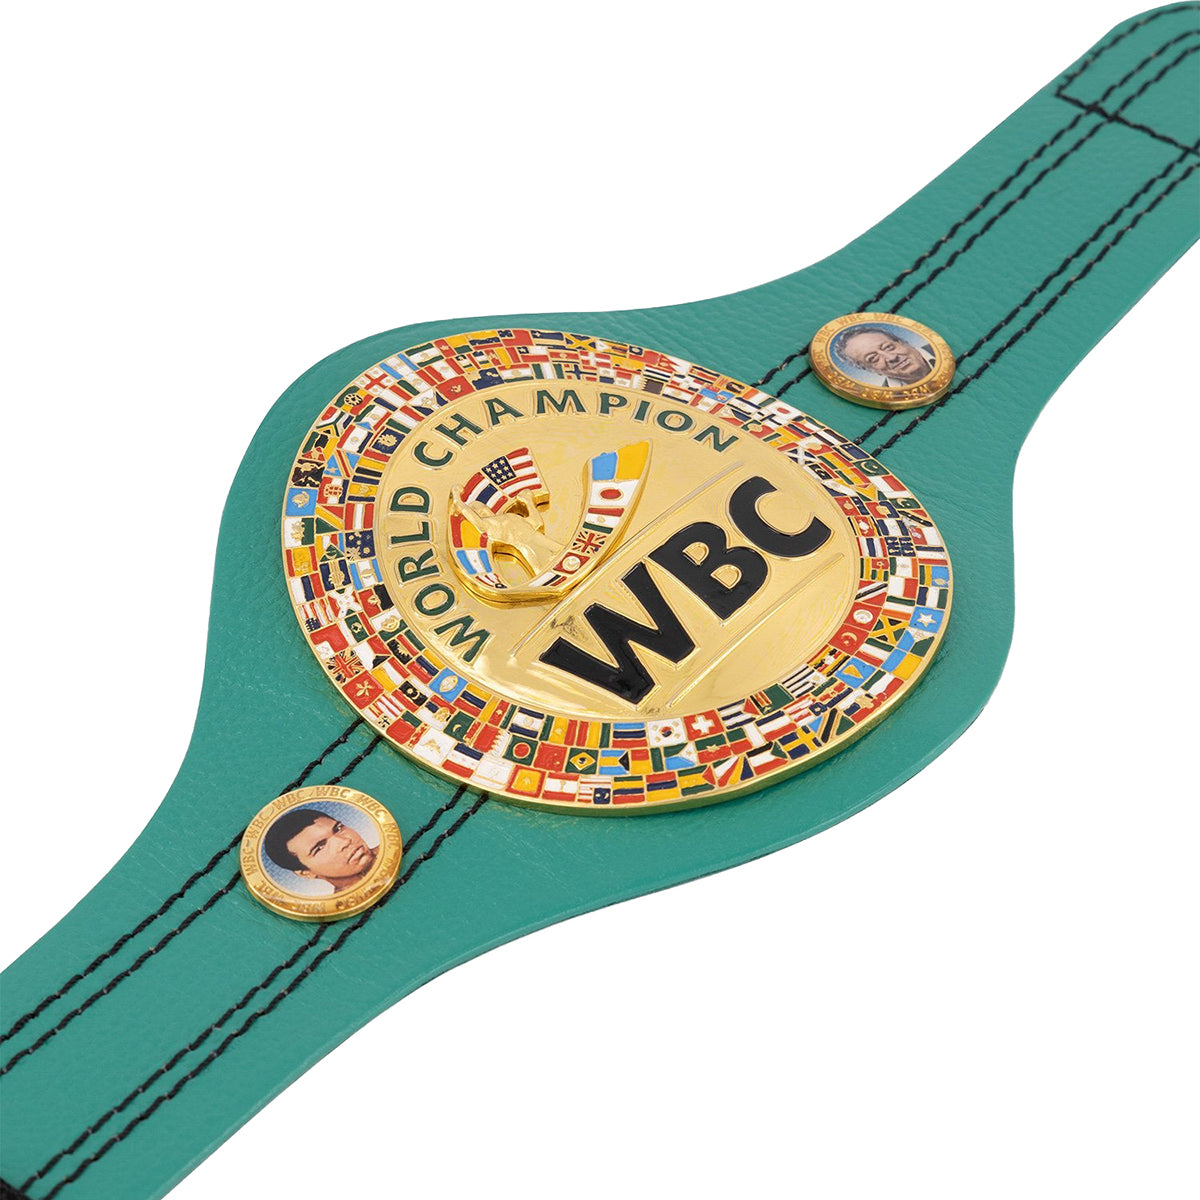 WBC - Championship Replica Belt